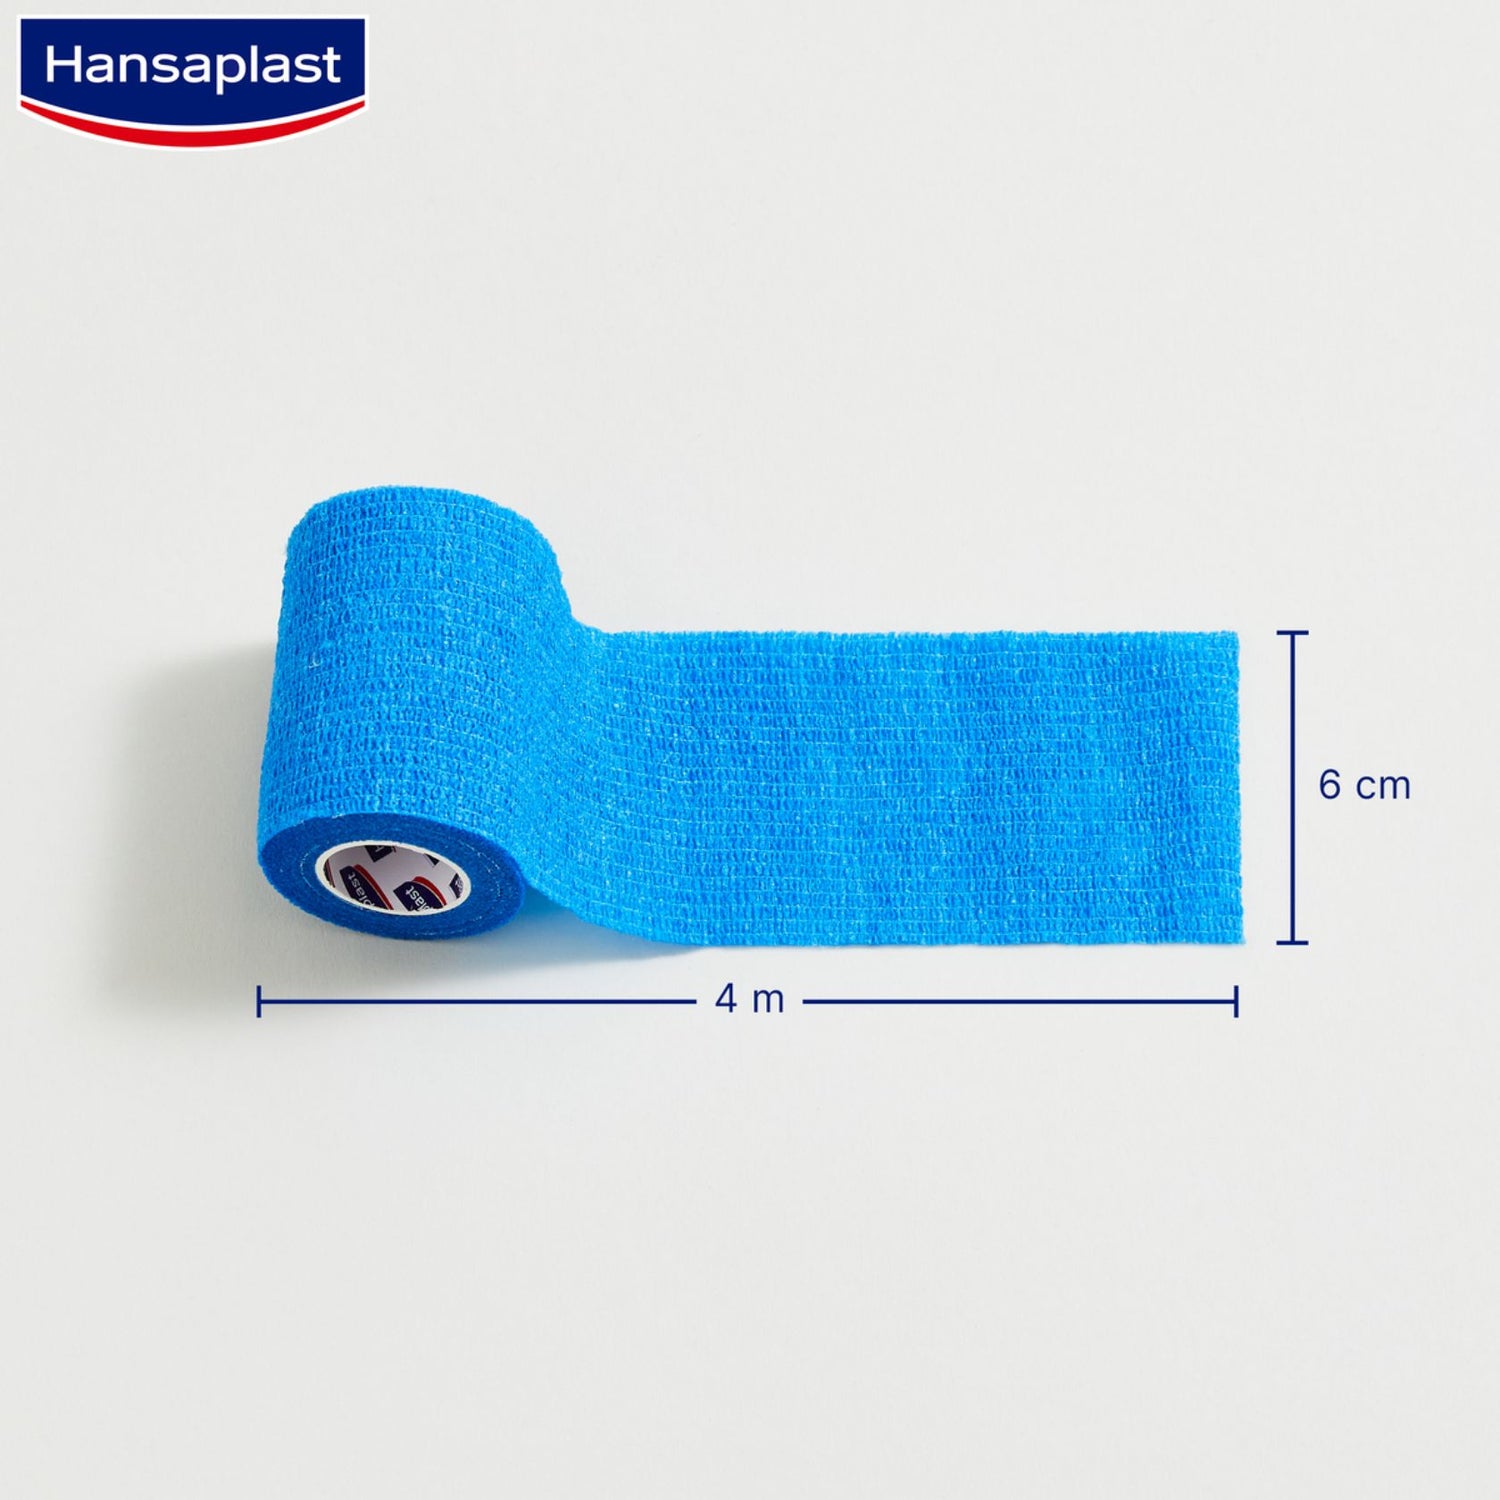 Hansaplast Med+ Cohesive Bandage 4mx6cm x1 (4.4ydx2.4in)